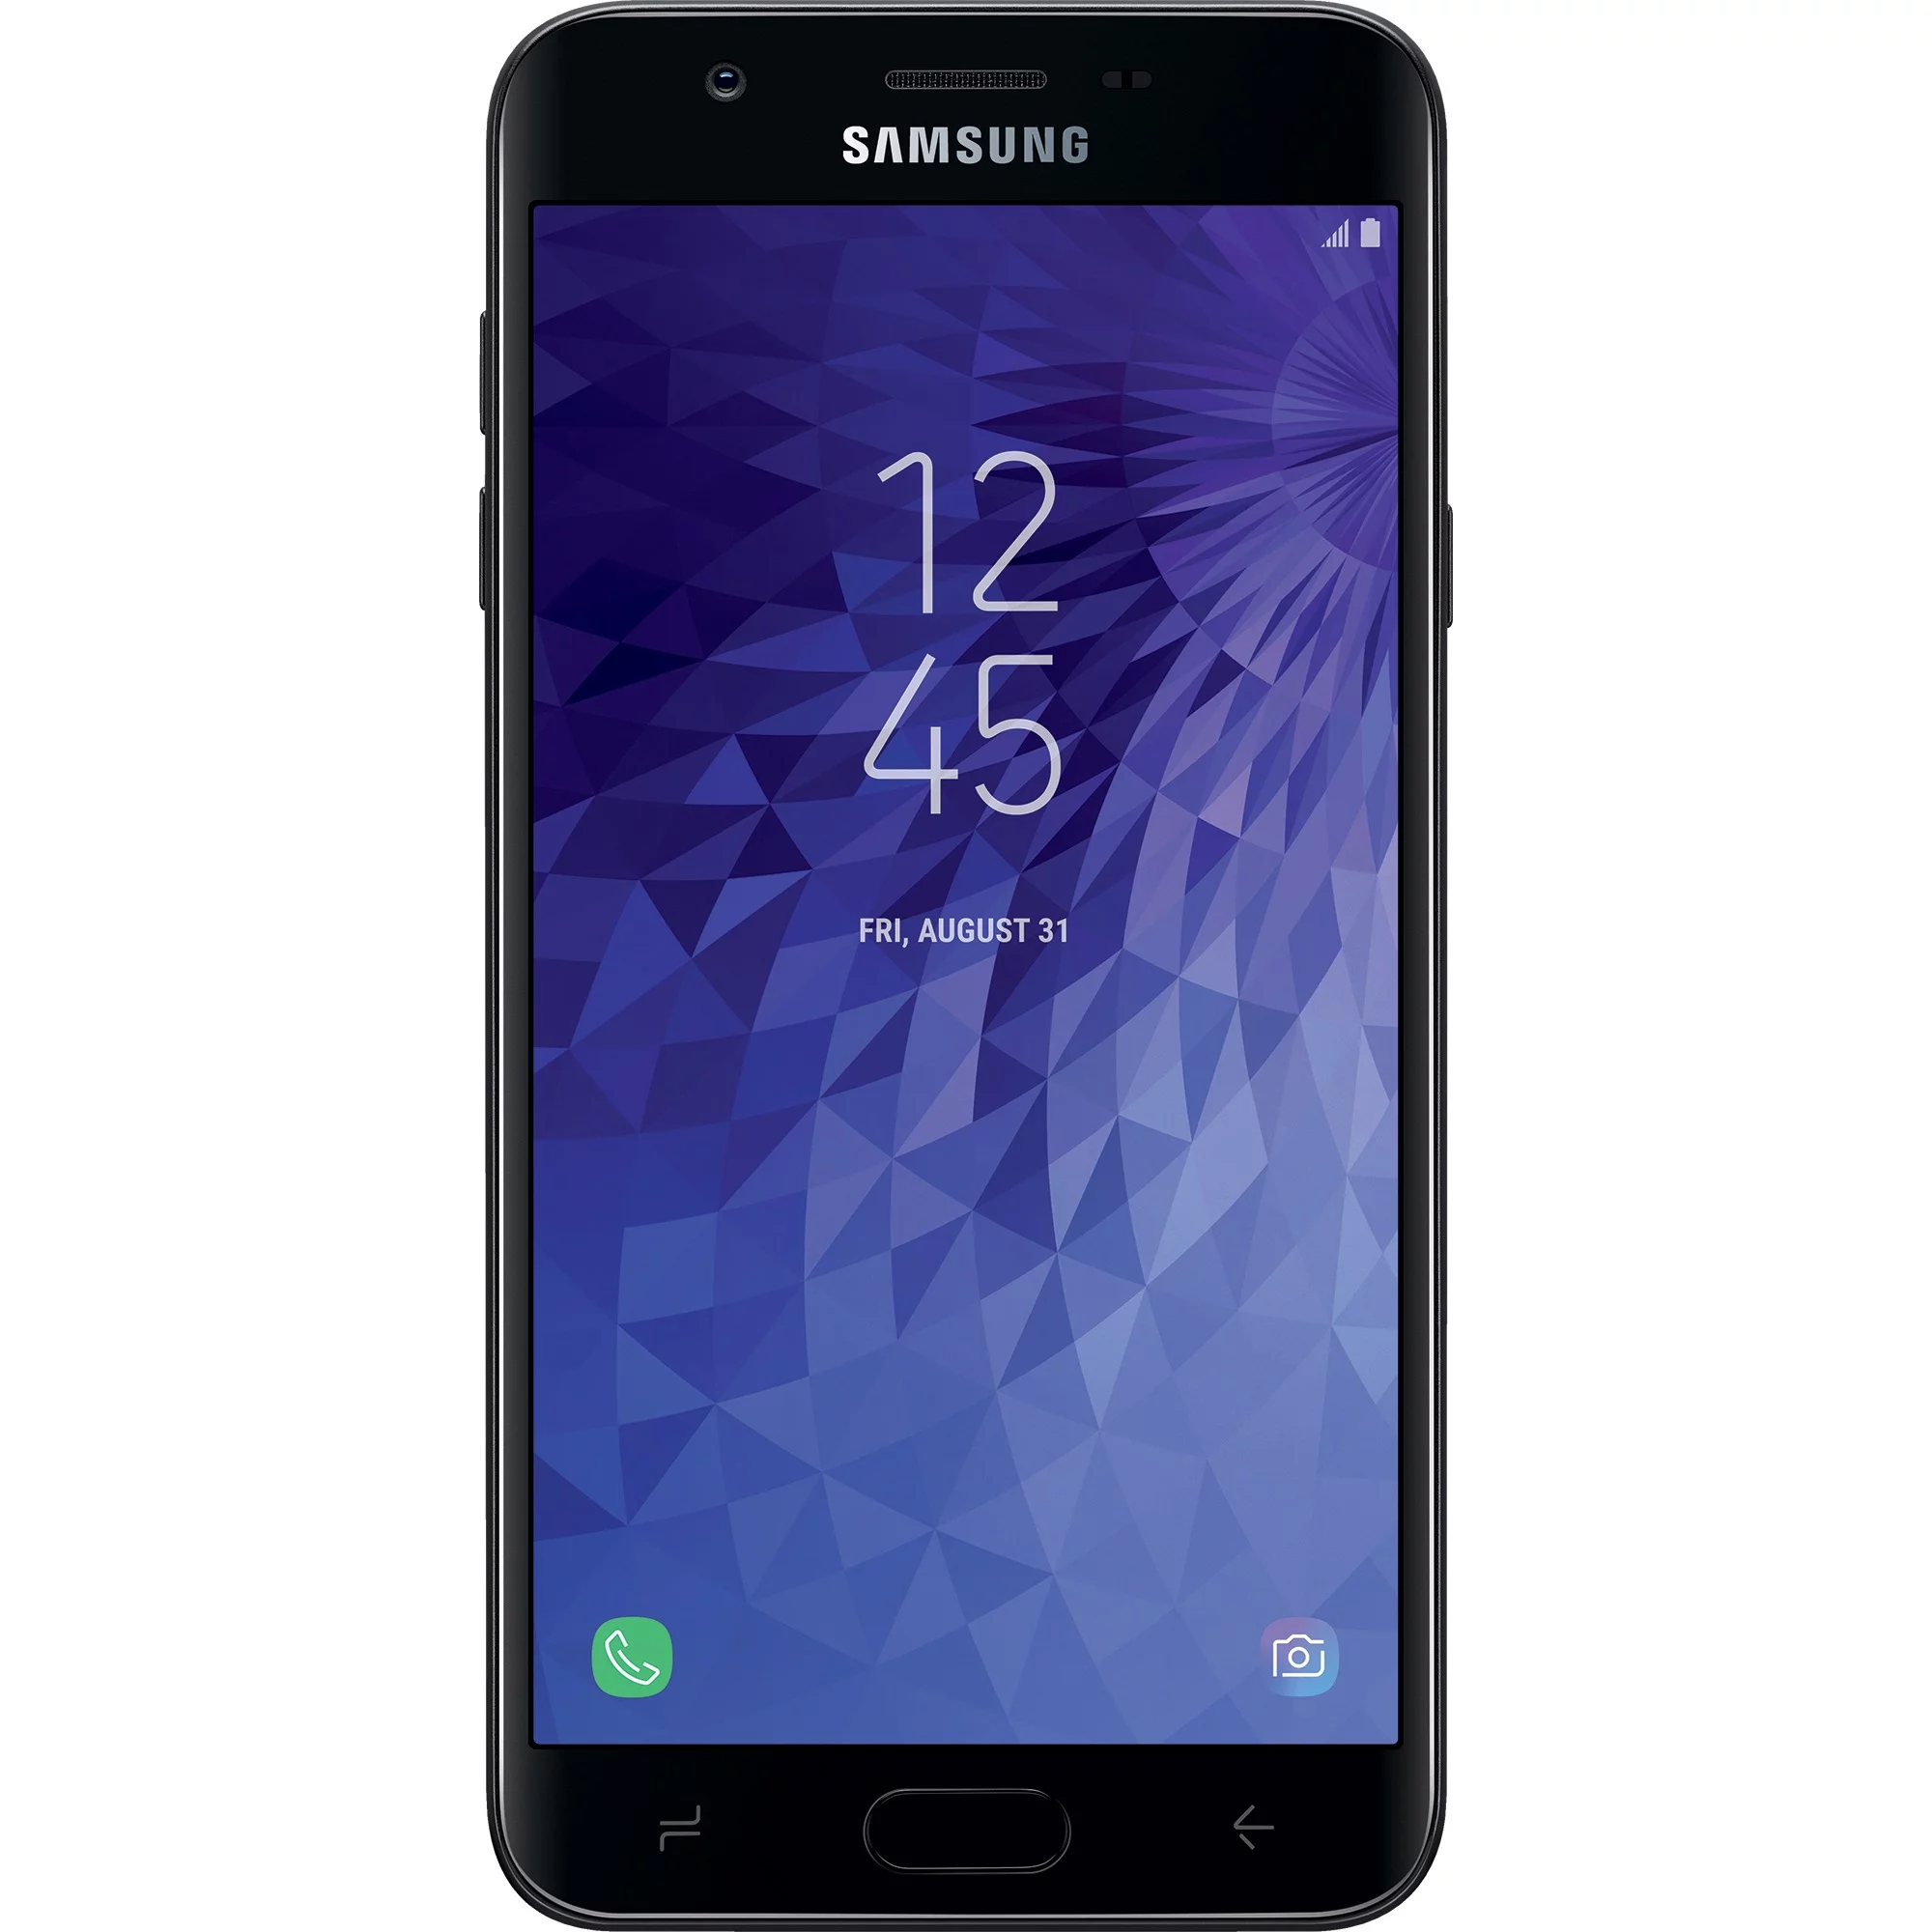 Net10 Samsung Galaxy J7 Crown, 32GB, Black - Grade A Refurbished Prepaid Smartphone [Locked to Net10]